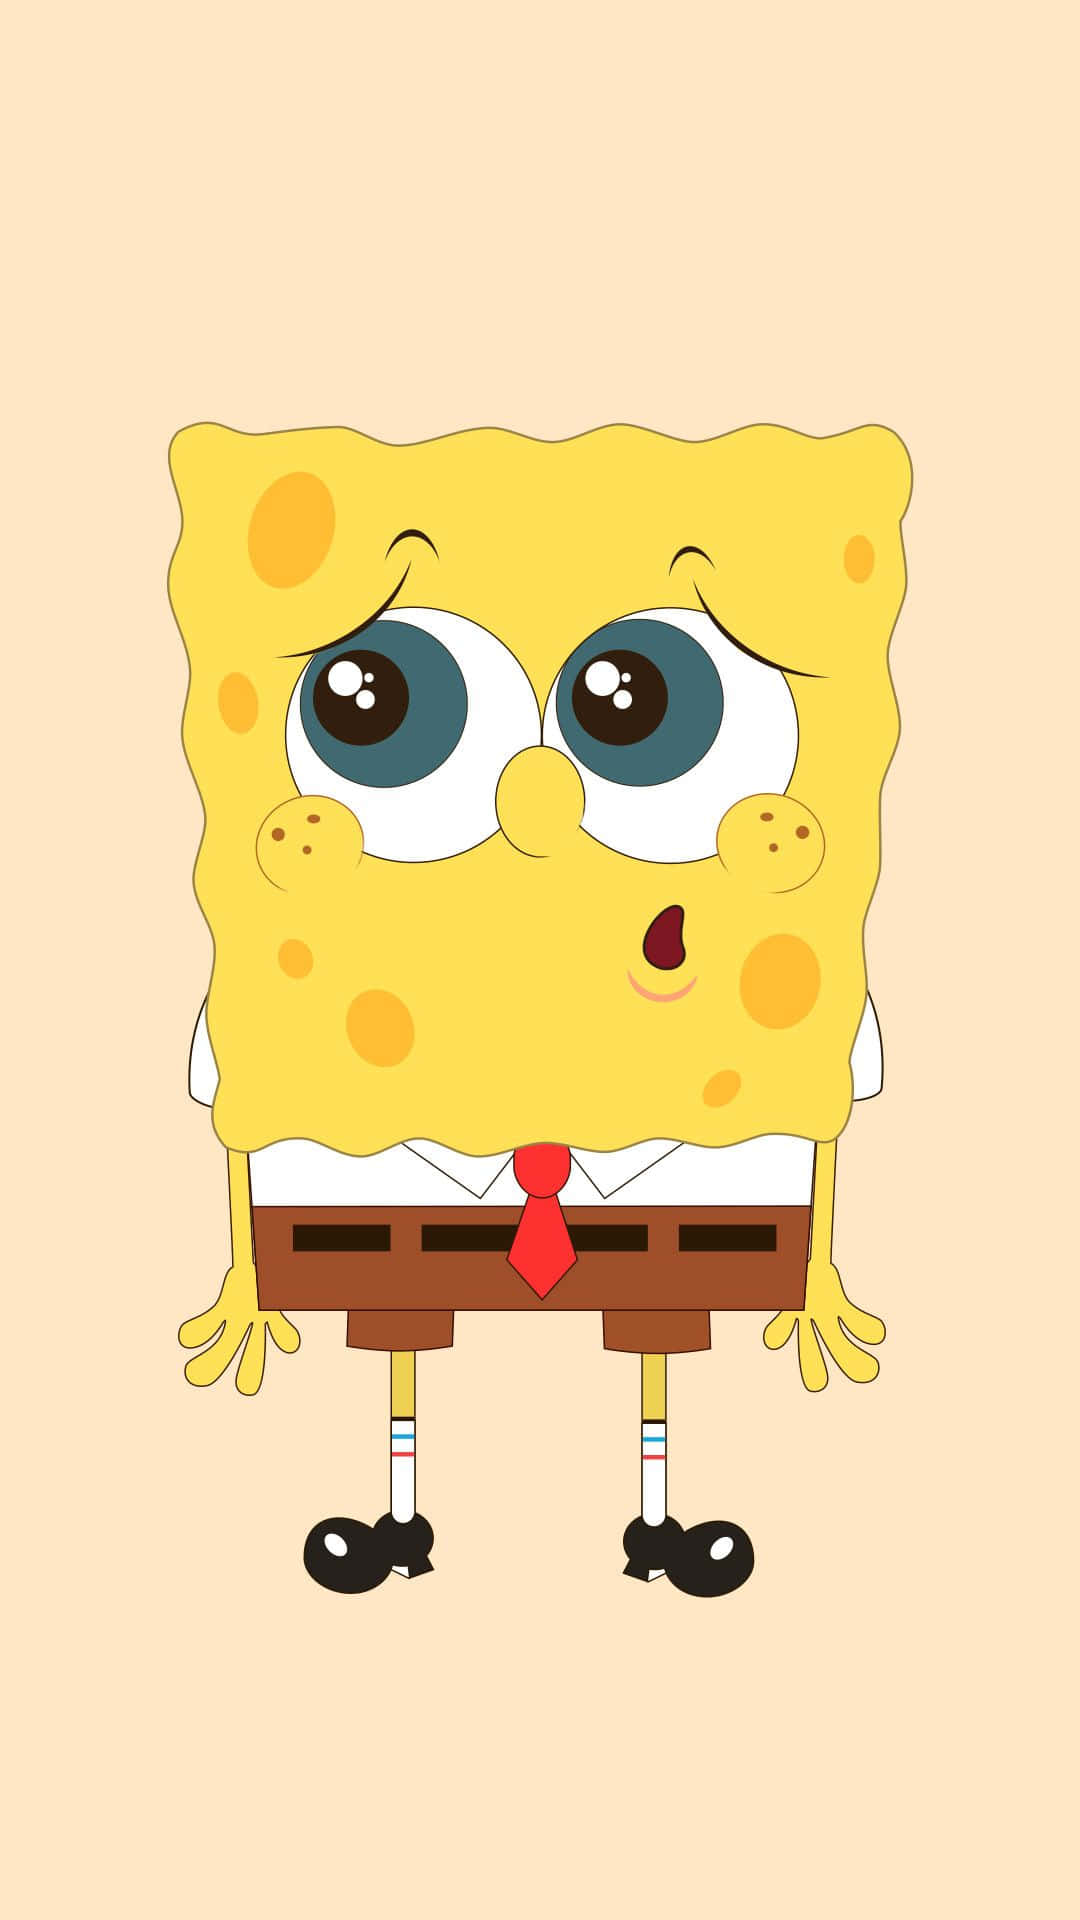 “Spongebob's viral face pose” Wallpaper